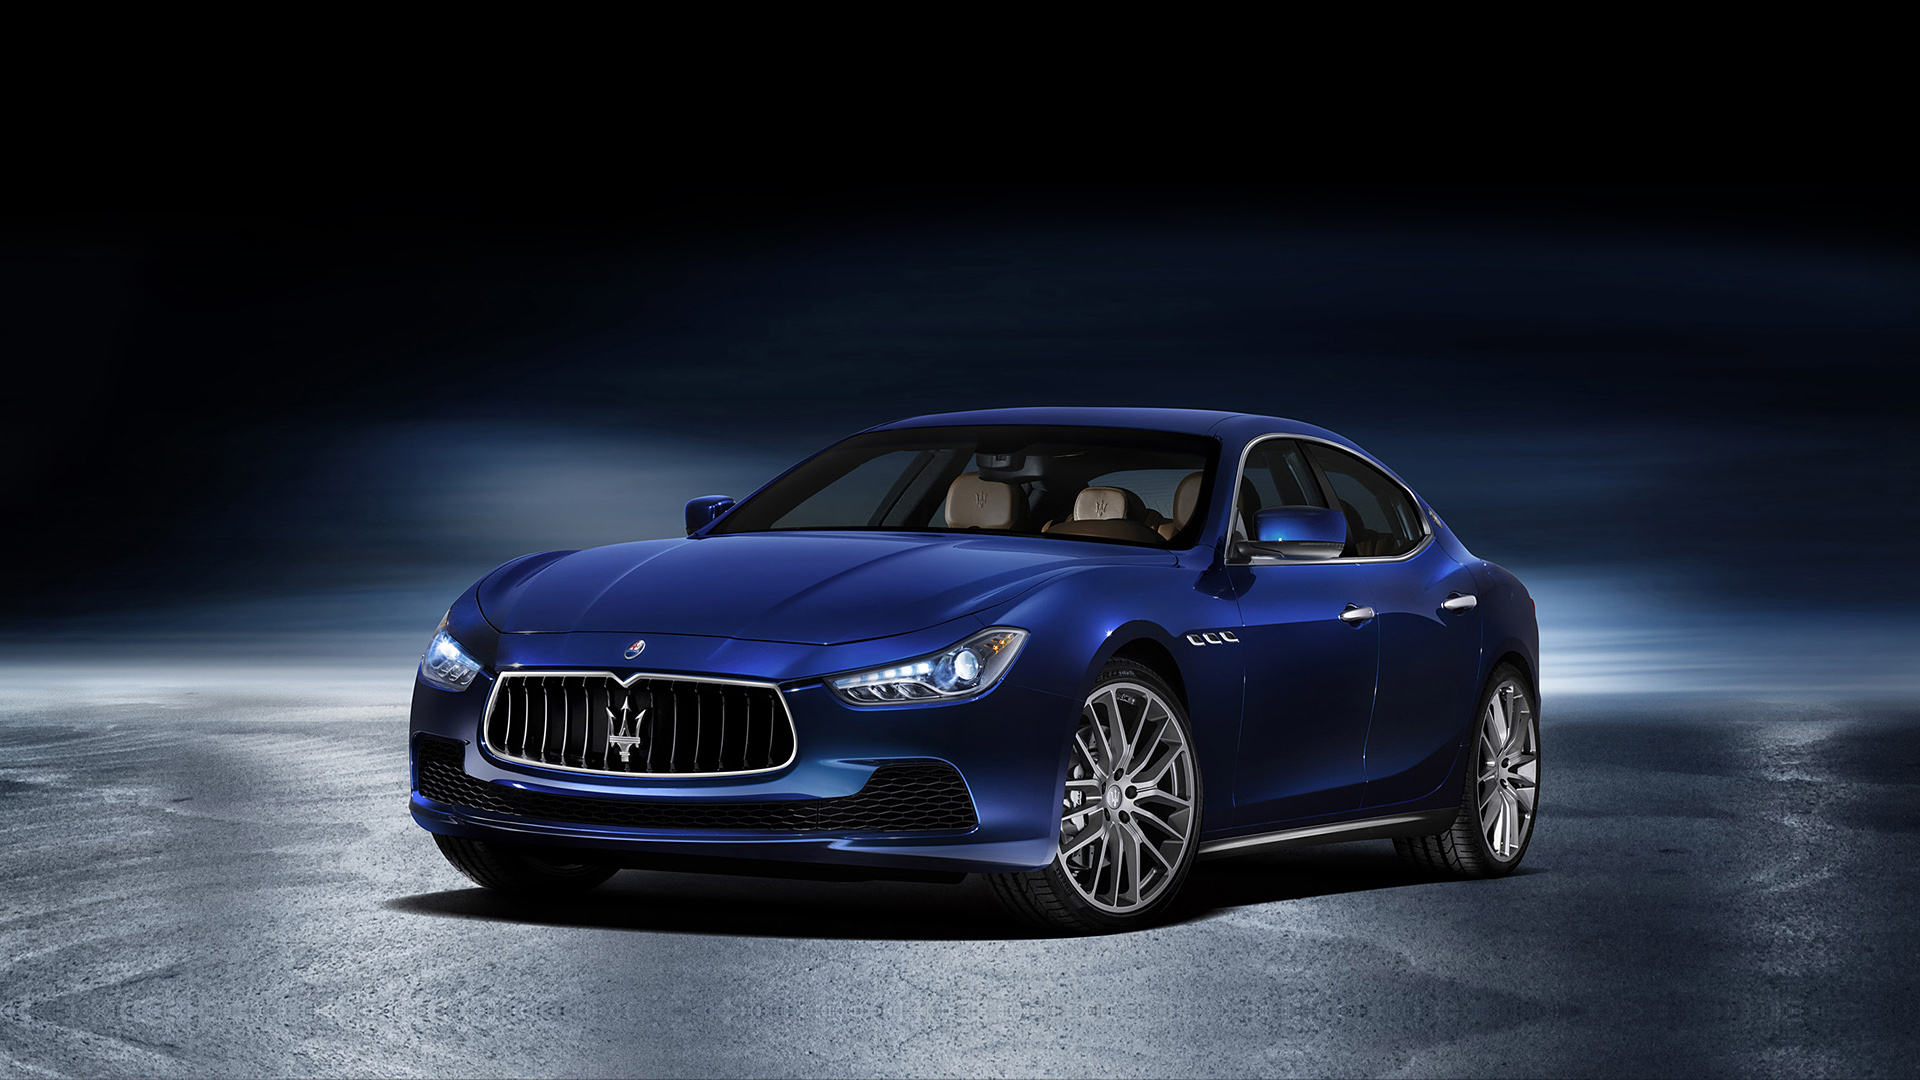  2014 Maserati Ghibli Wallpaper.